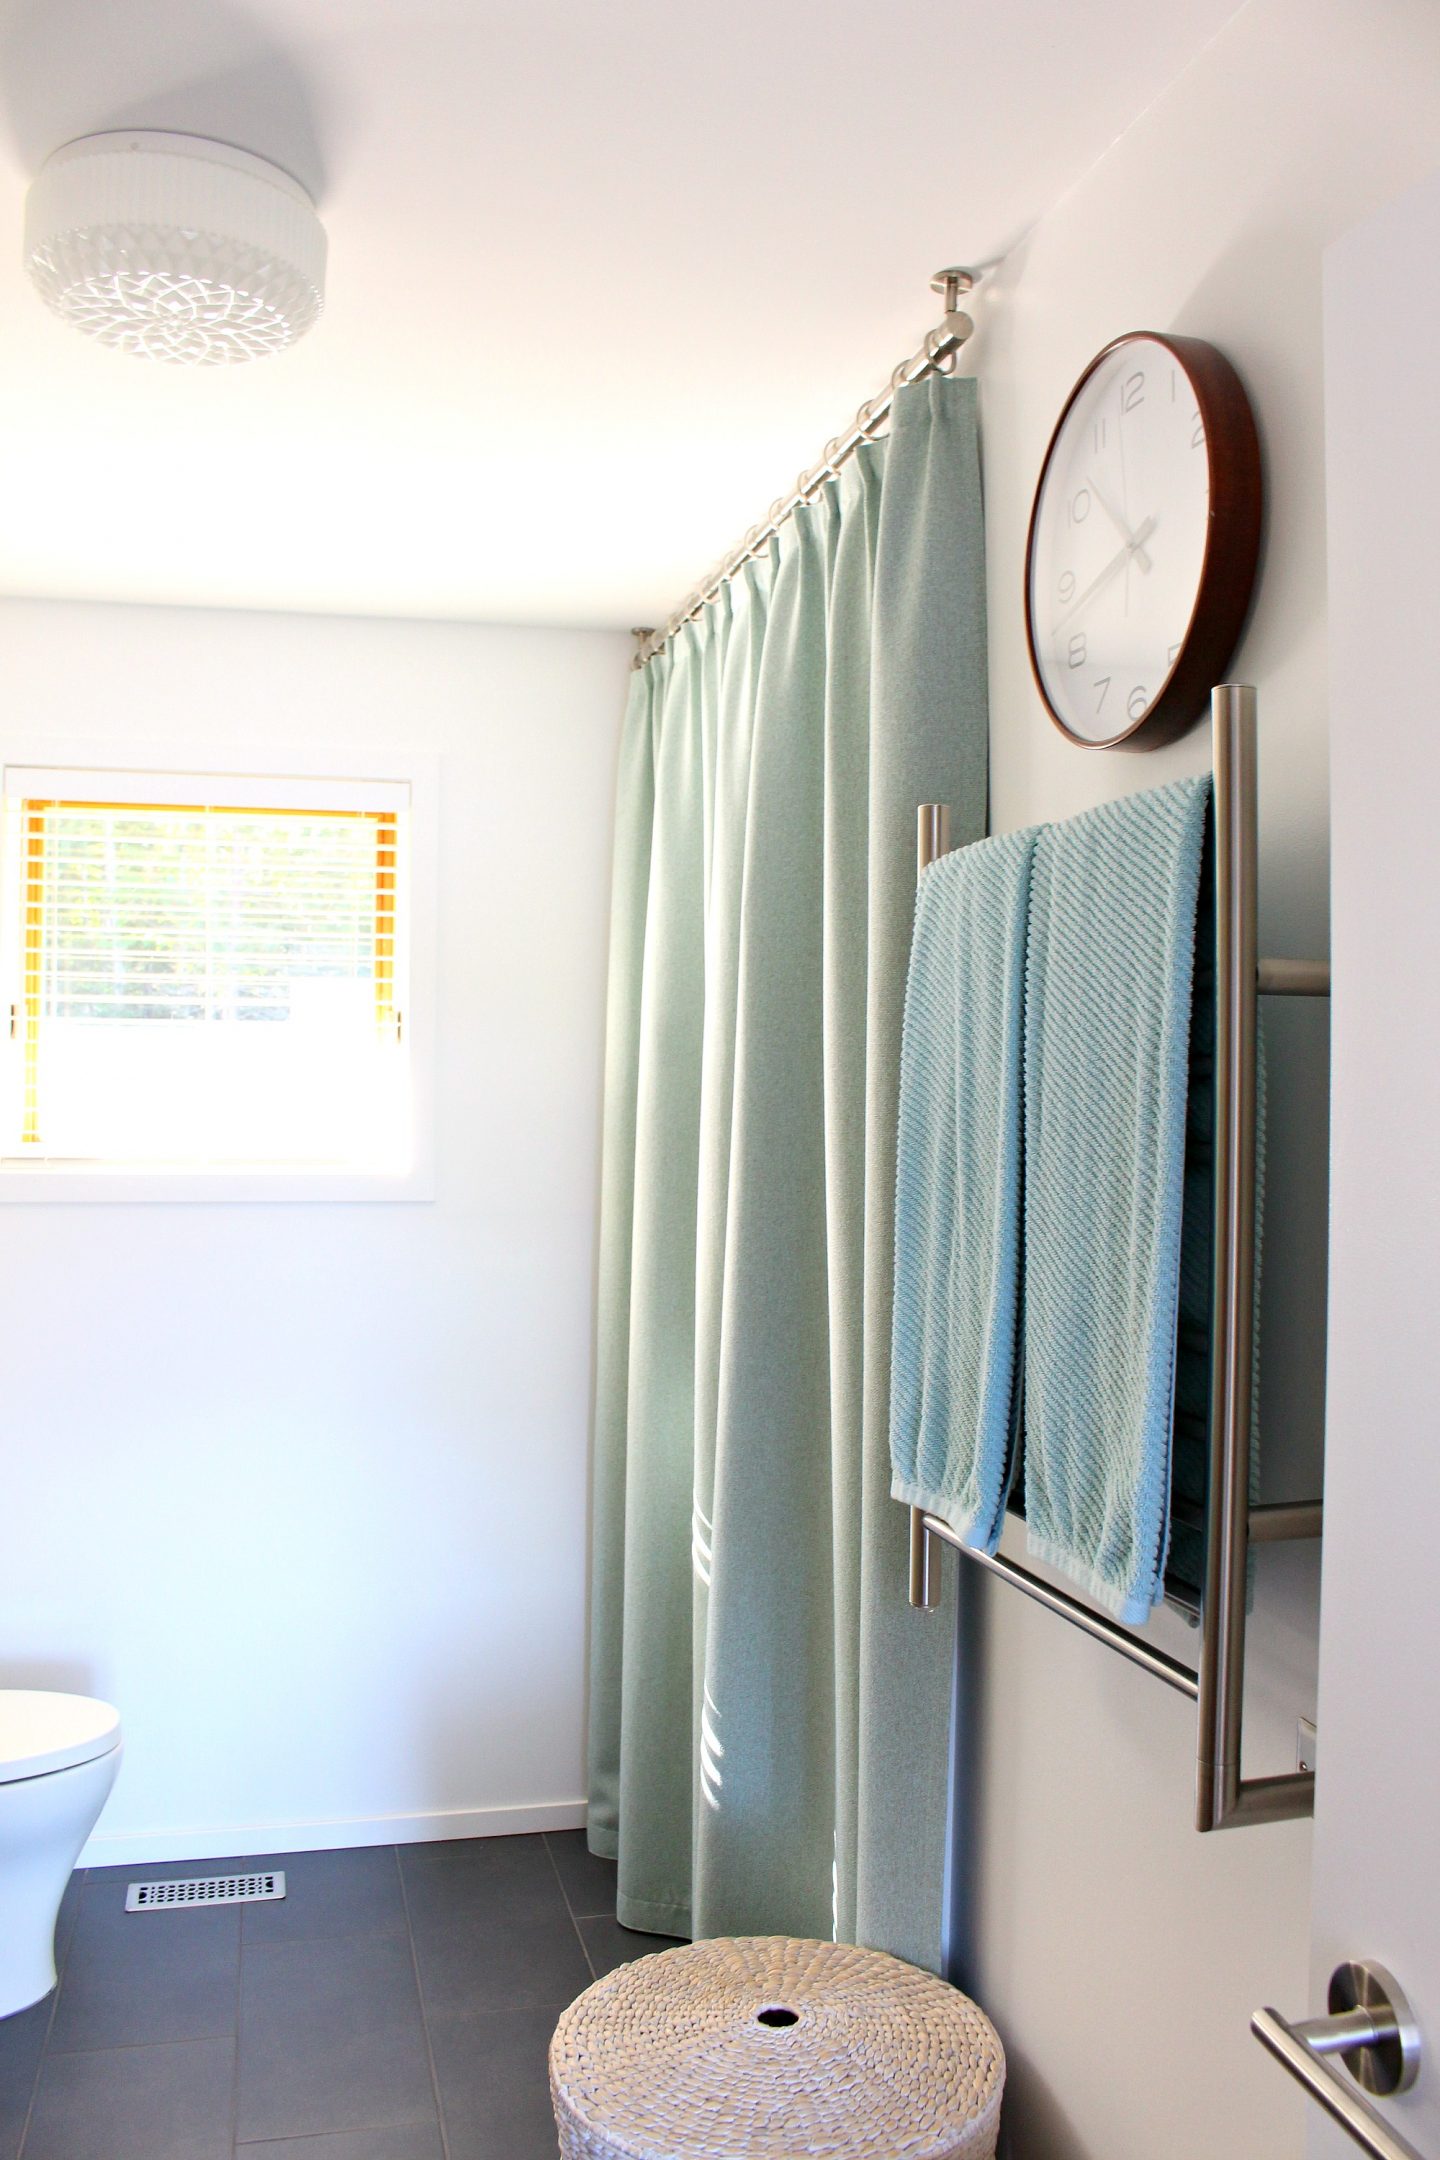 bathroom shower curtain rods